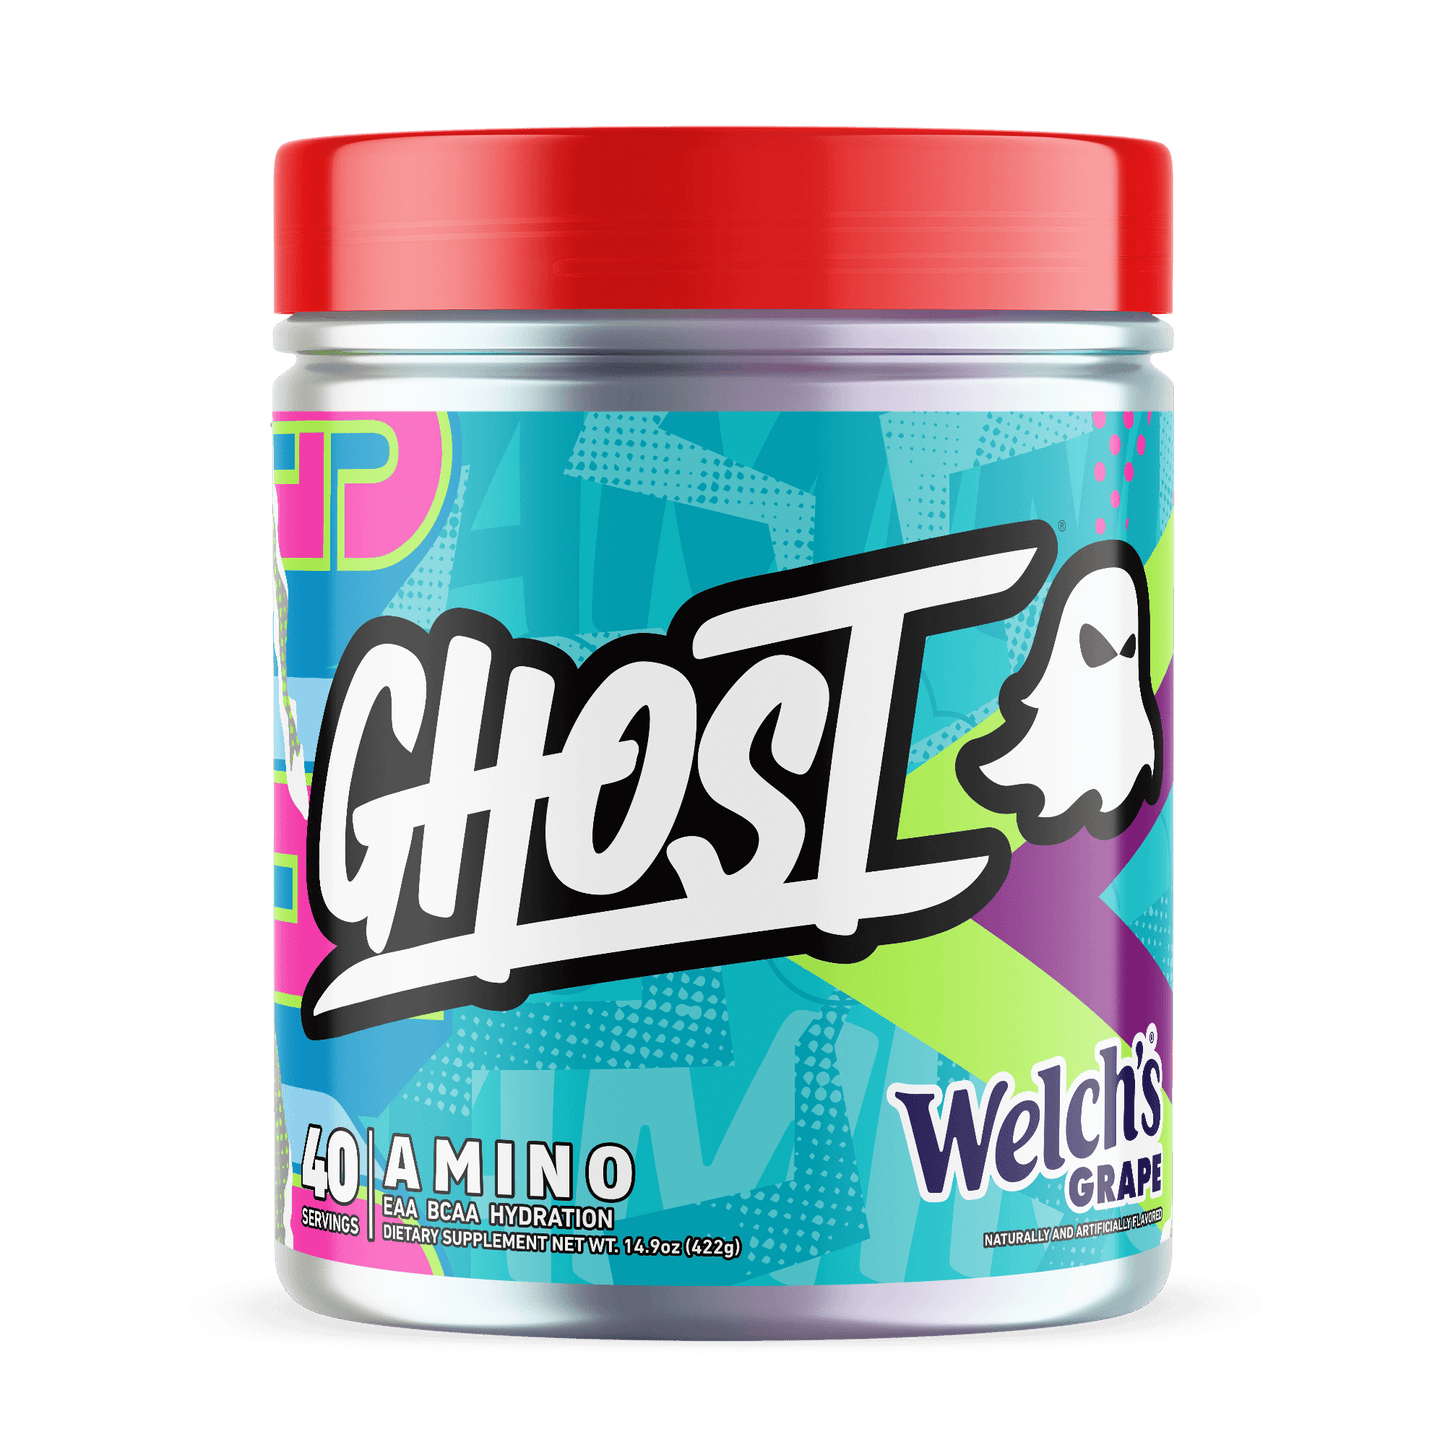 Ghost Amino V2